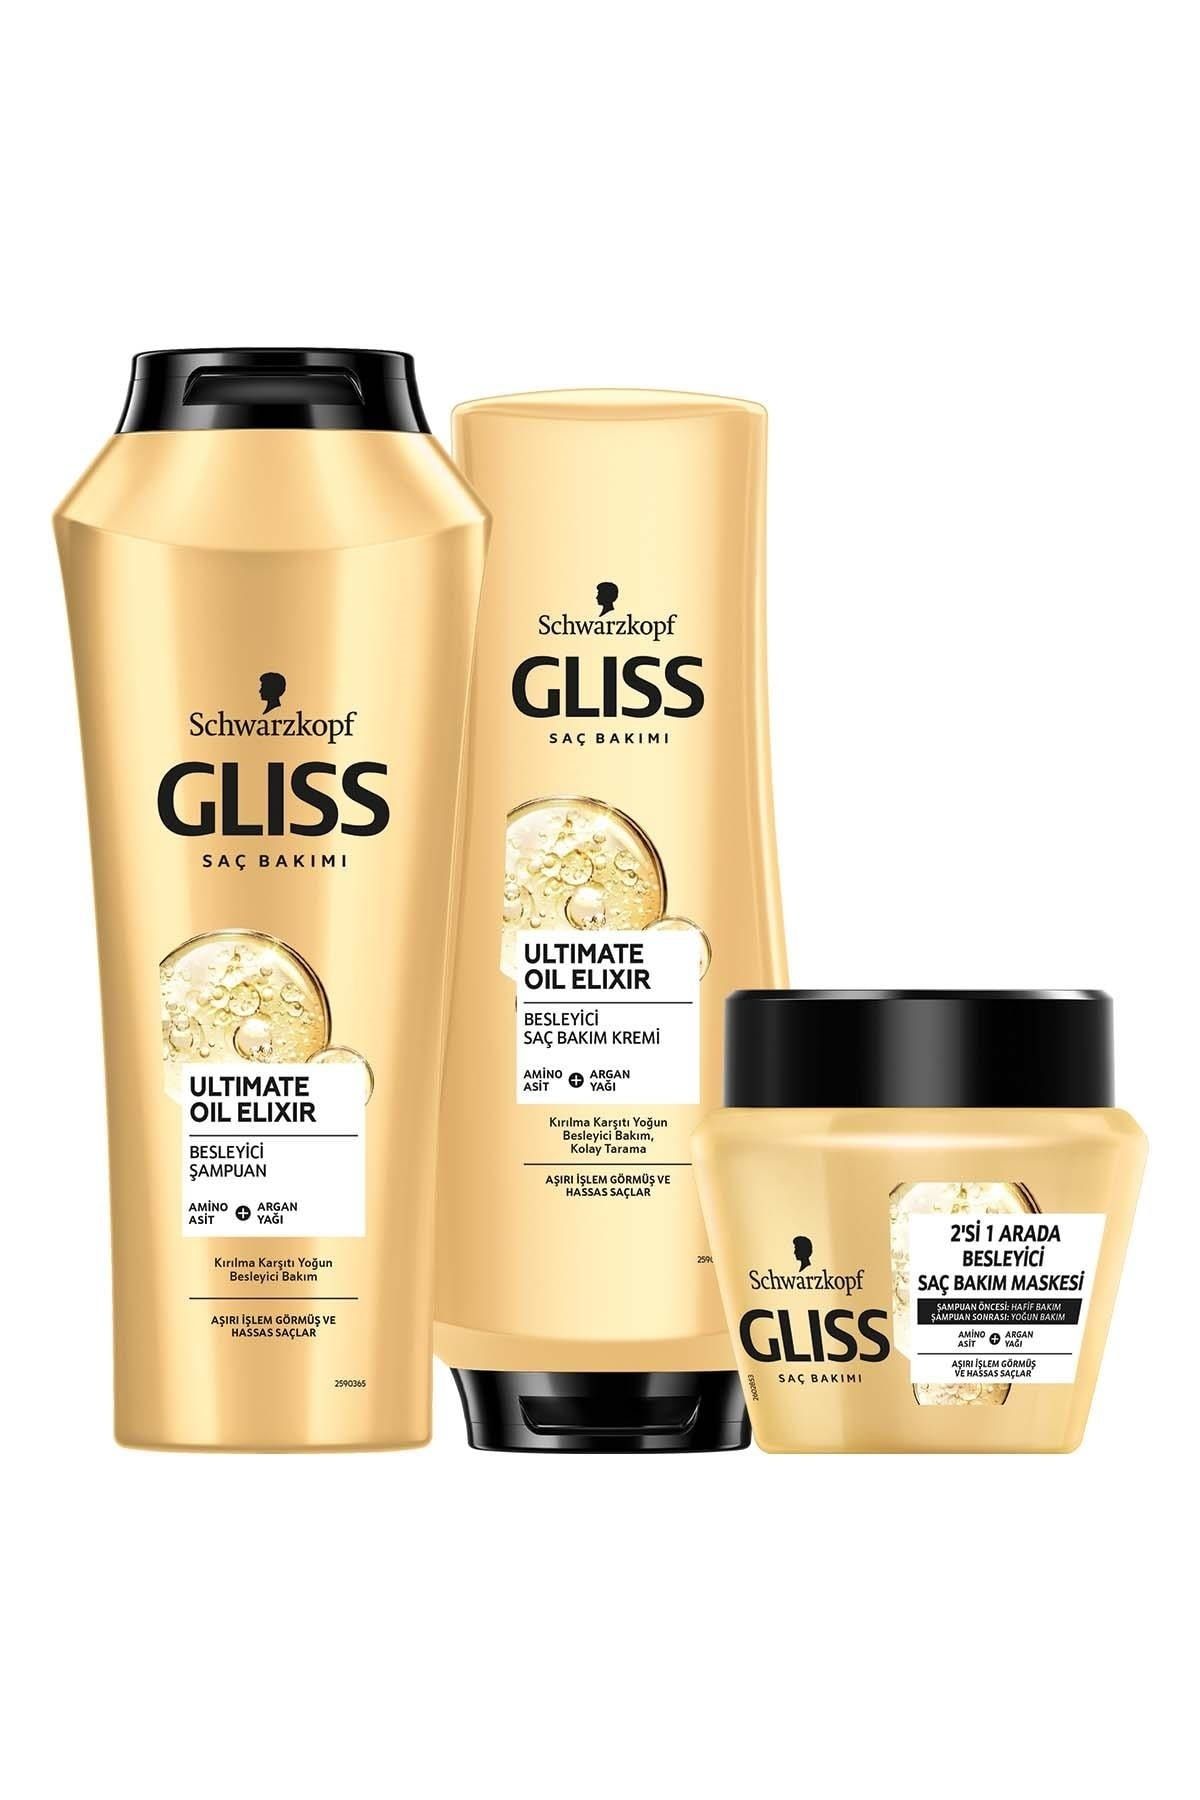 Gliss مجموعه مراقبت از مو با روغن اصلی و کرم مو و ماسک گلیس